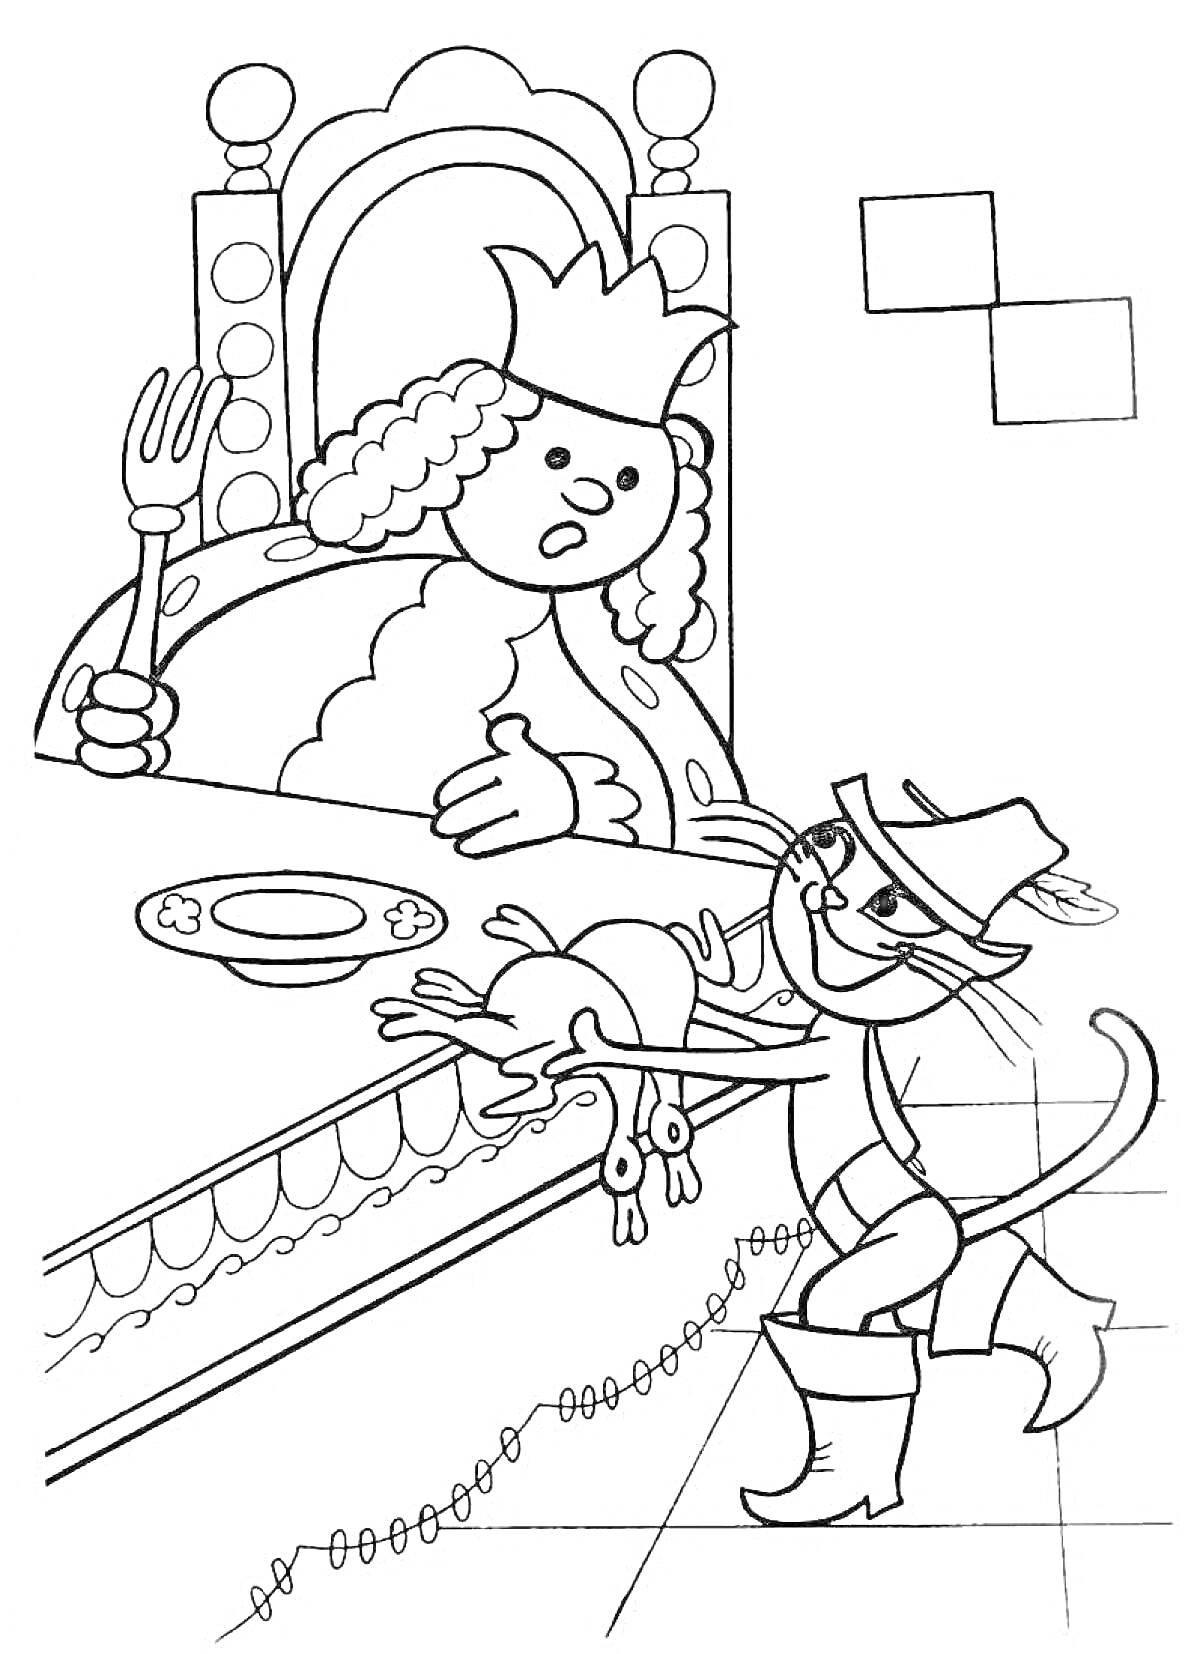 На раскраске изображено: Кот в сапогах, Король, Замок, Еда, Стол, Вилка, Тарелка, Шляпа, Сапоги